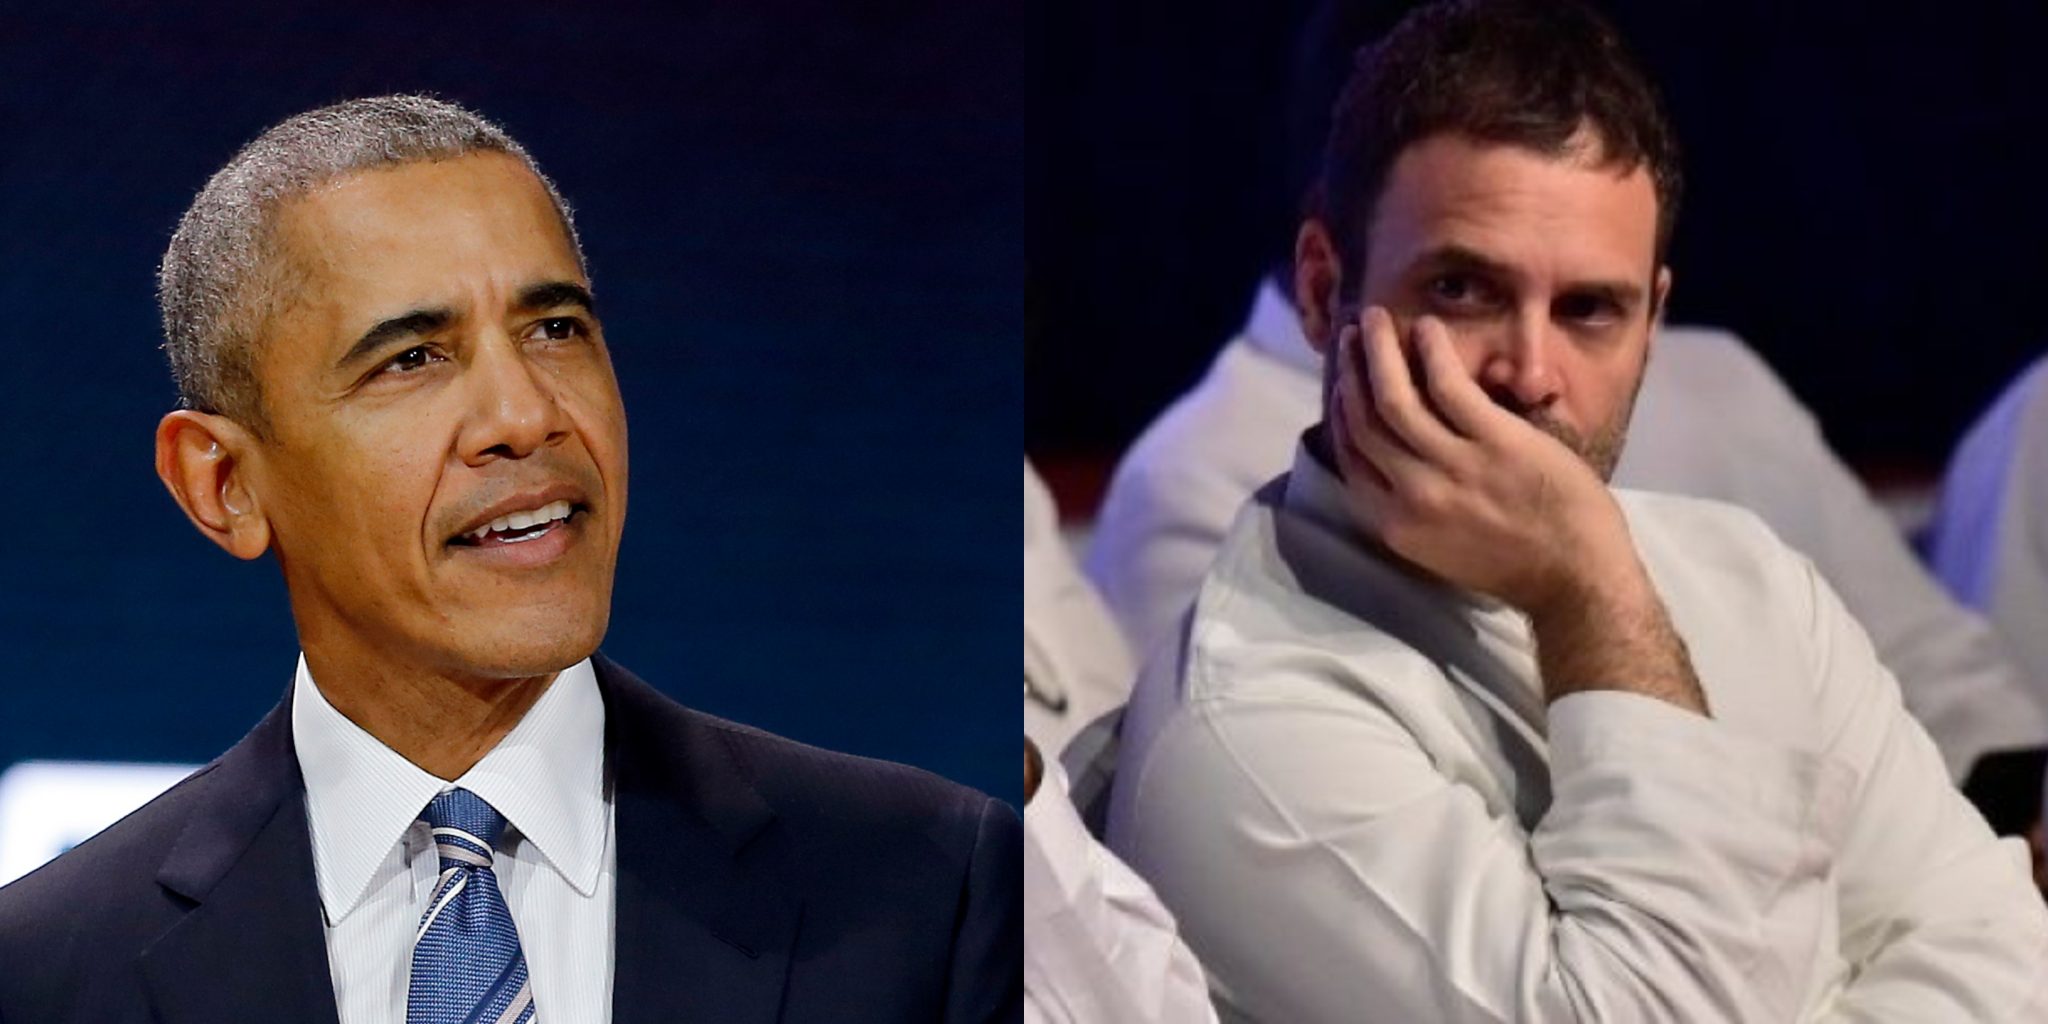 Rahul Gandhi has nervous, uninformed quality says Obama